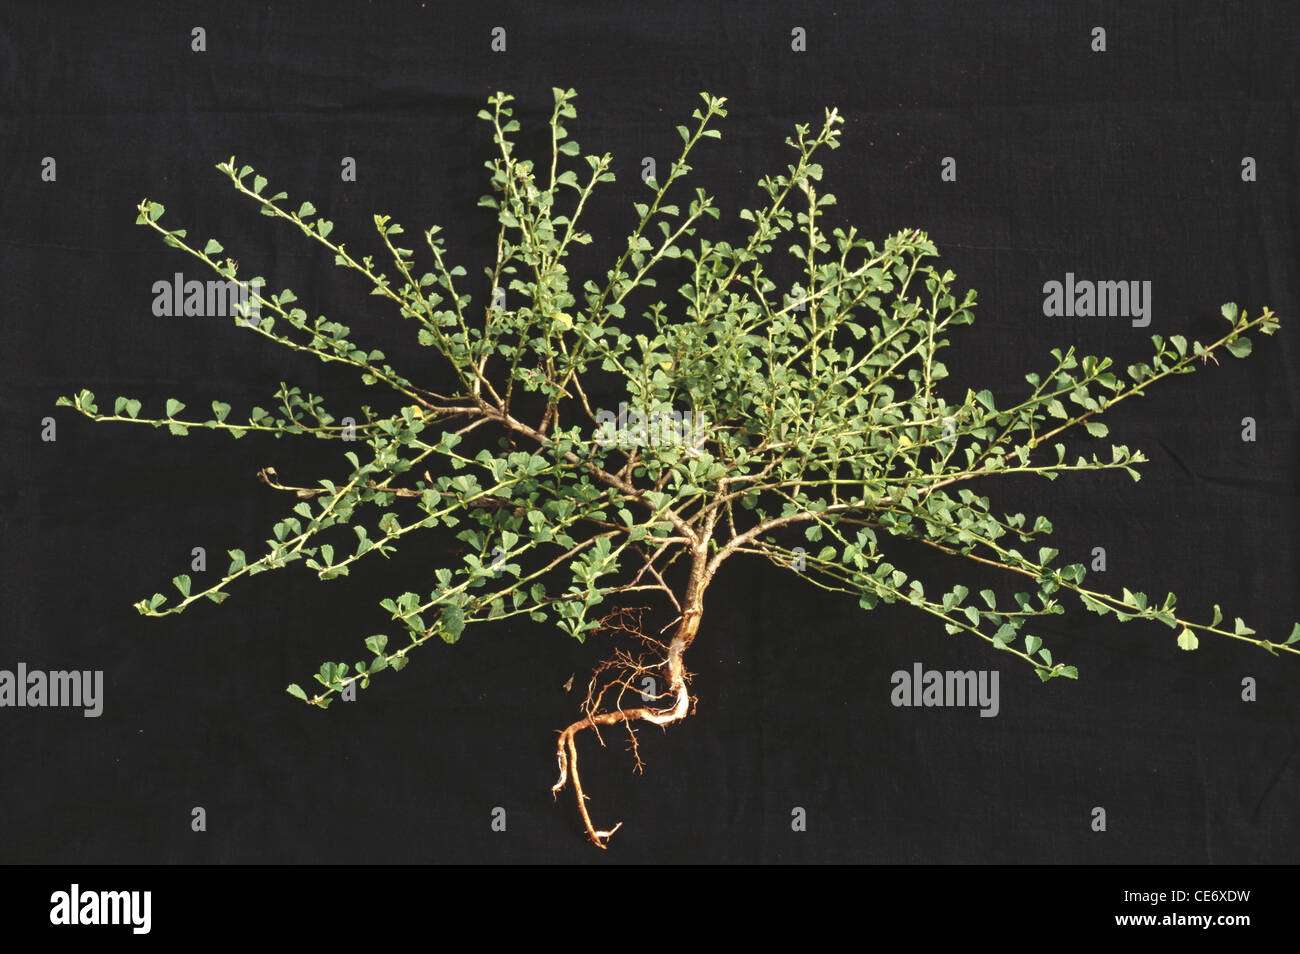 Medicinal plant ; fanpetals ; sida plant ; malvaceae ; sida ; cordata ; india ; asia Stock Photo